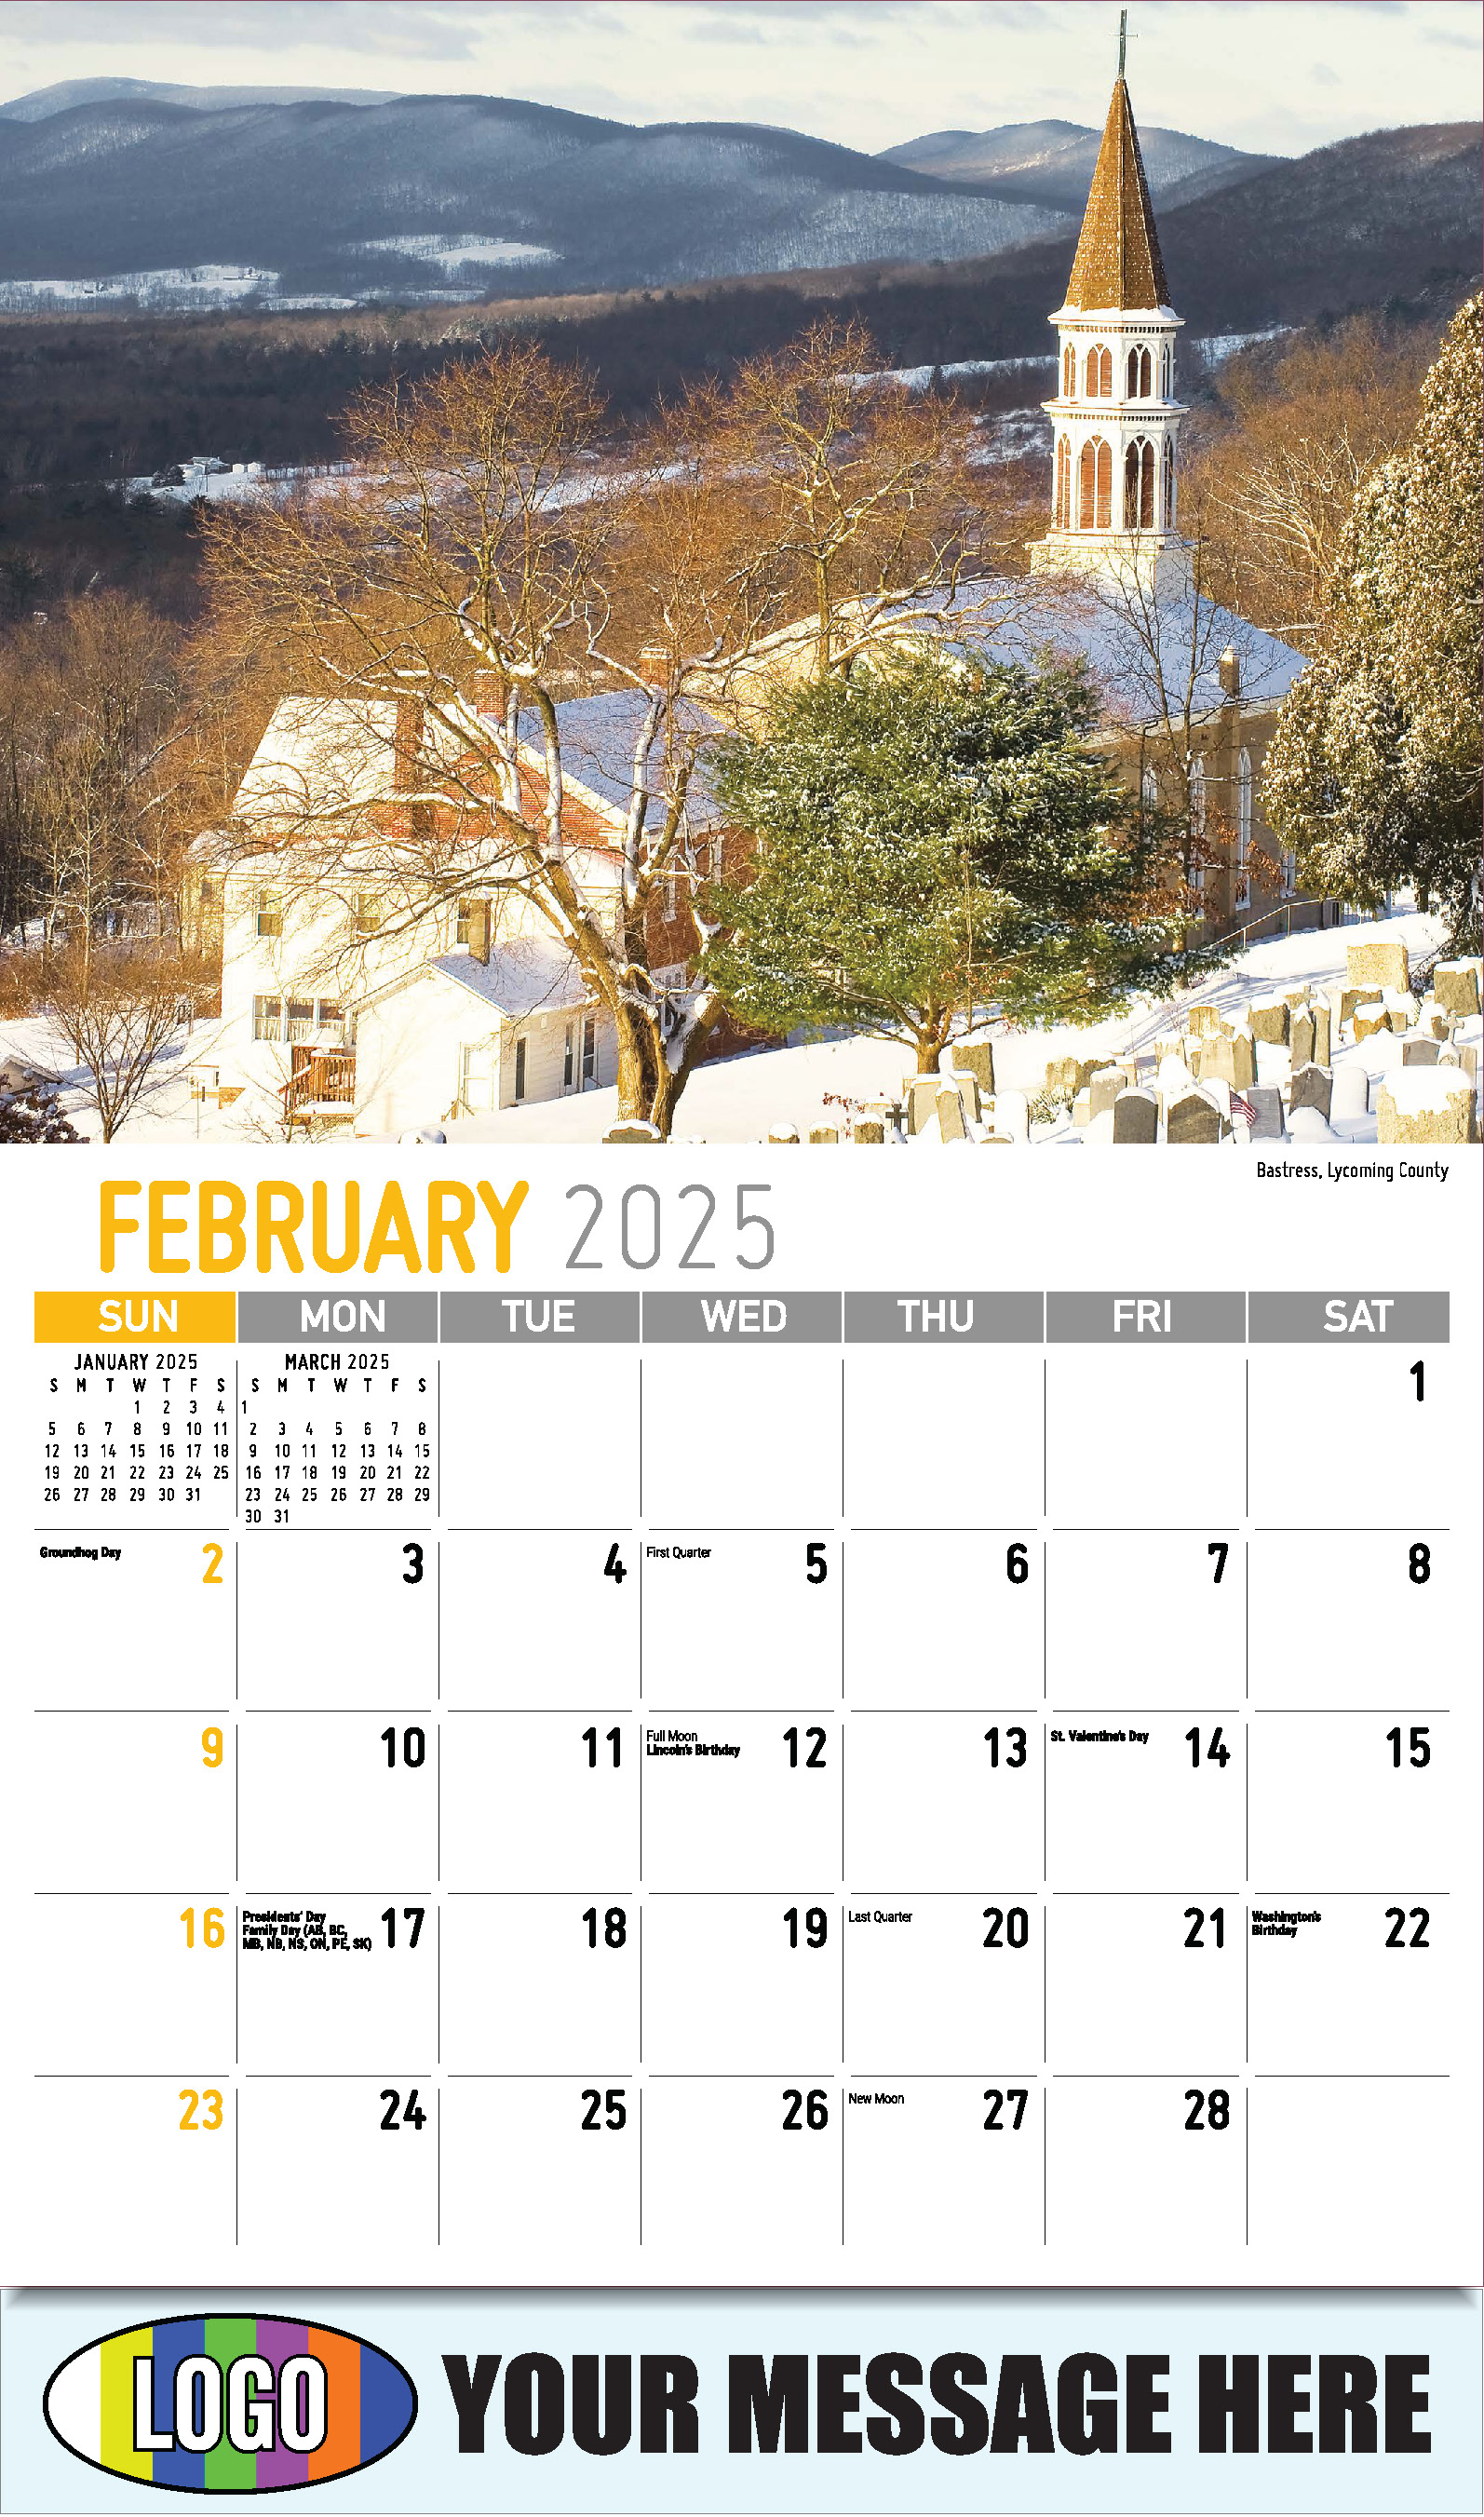 Scenes of Pennsylvania 2025 Business Promotion Calendar - February